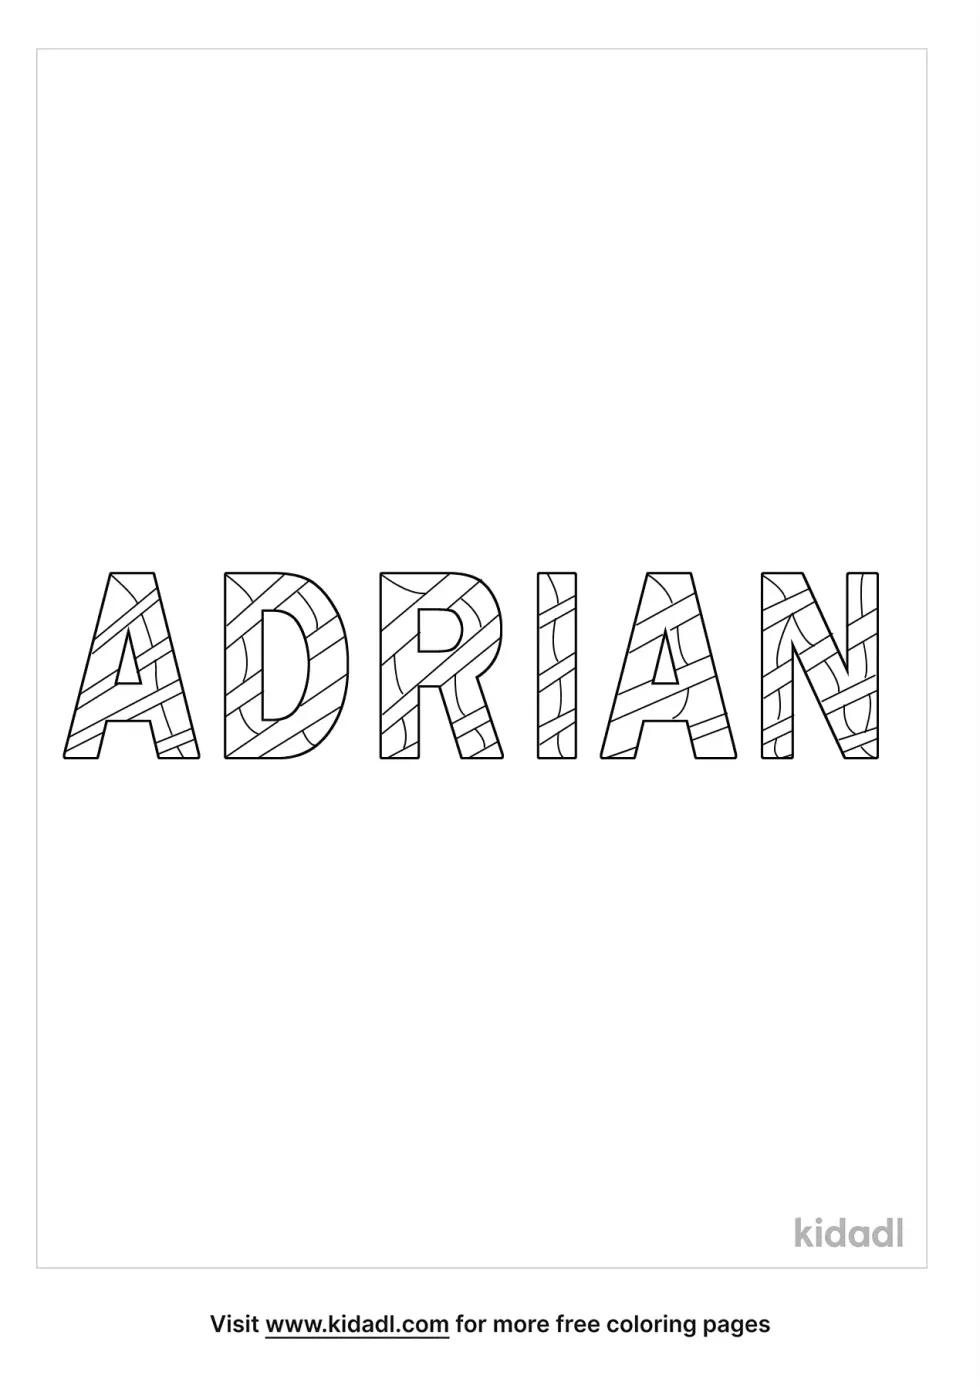 Adrian Name